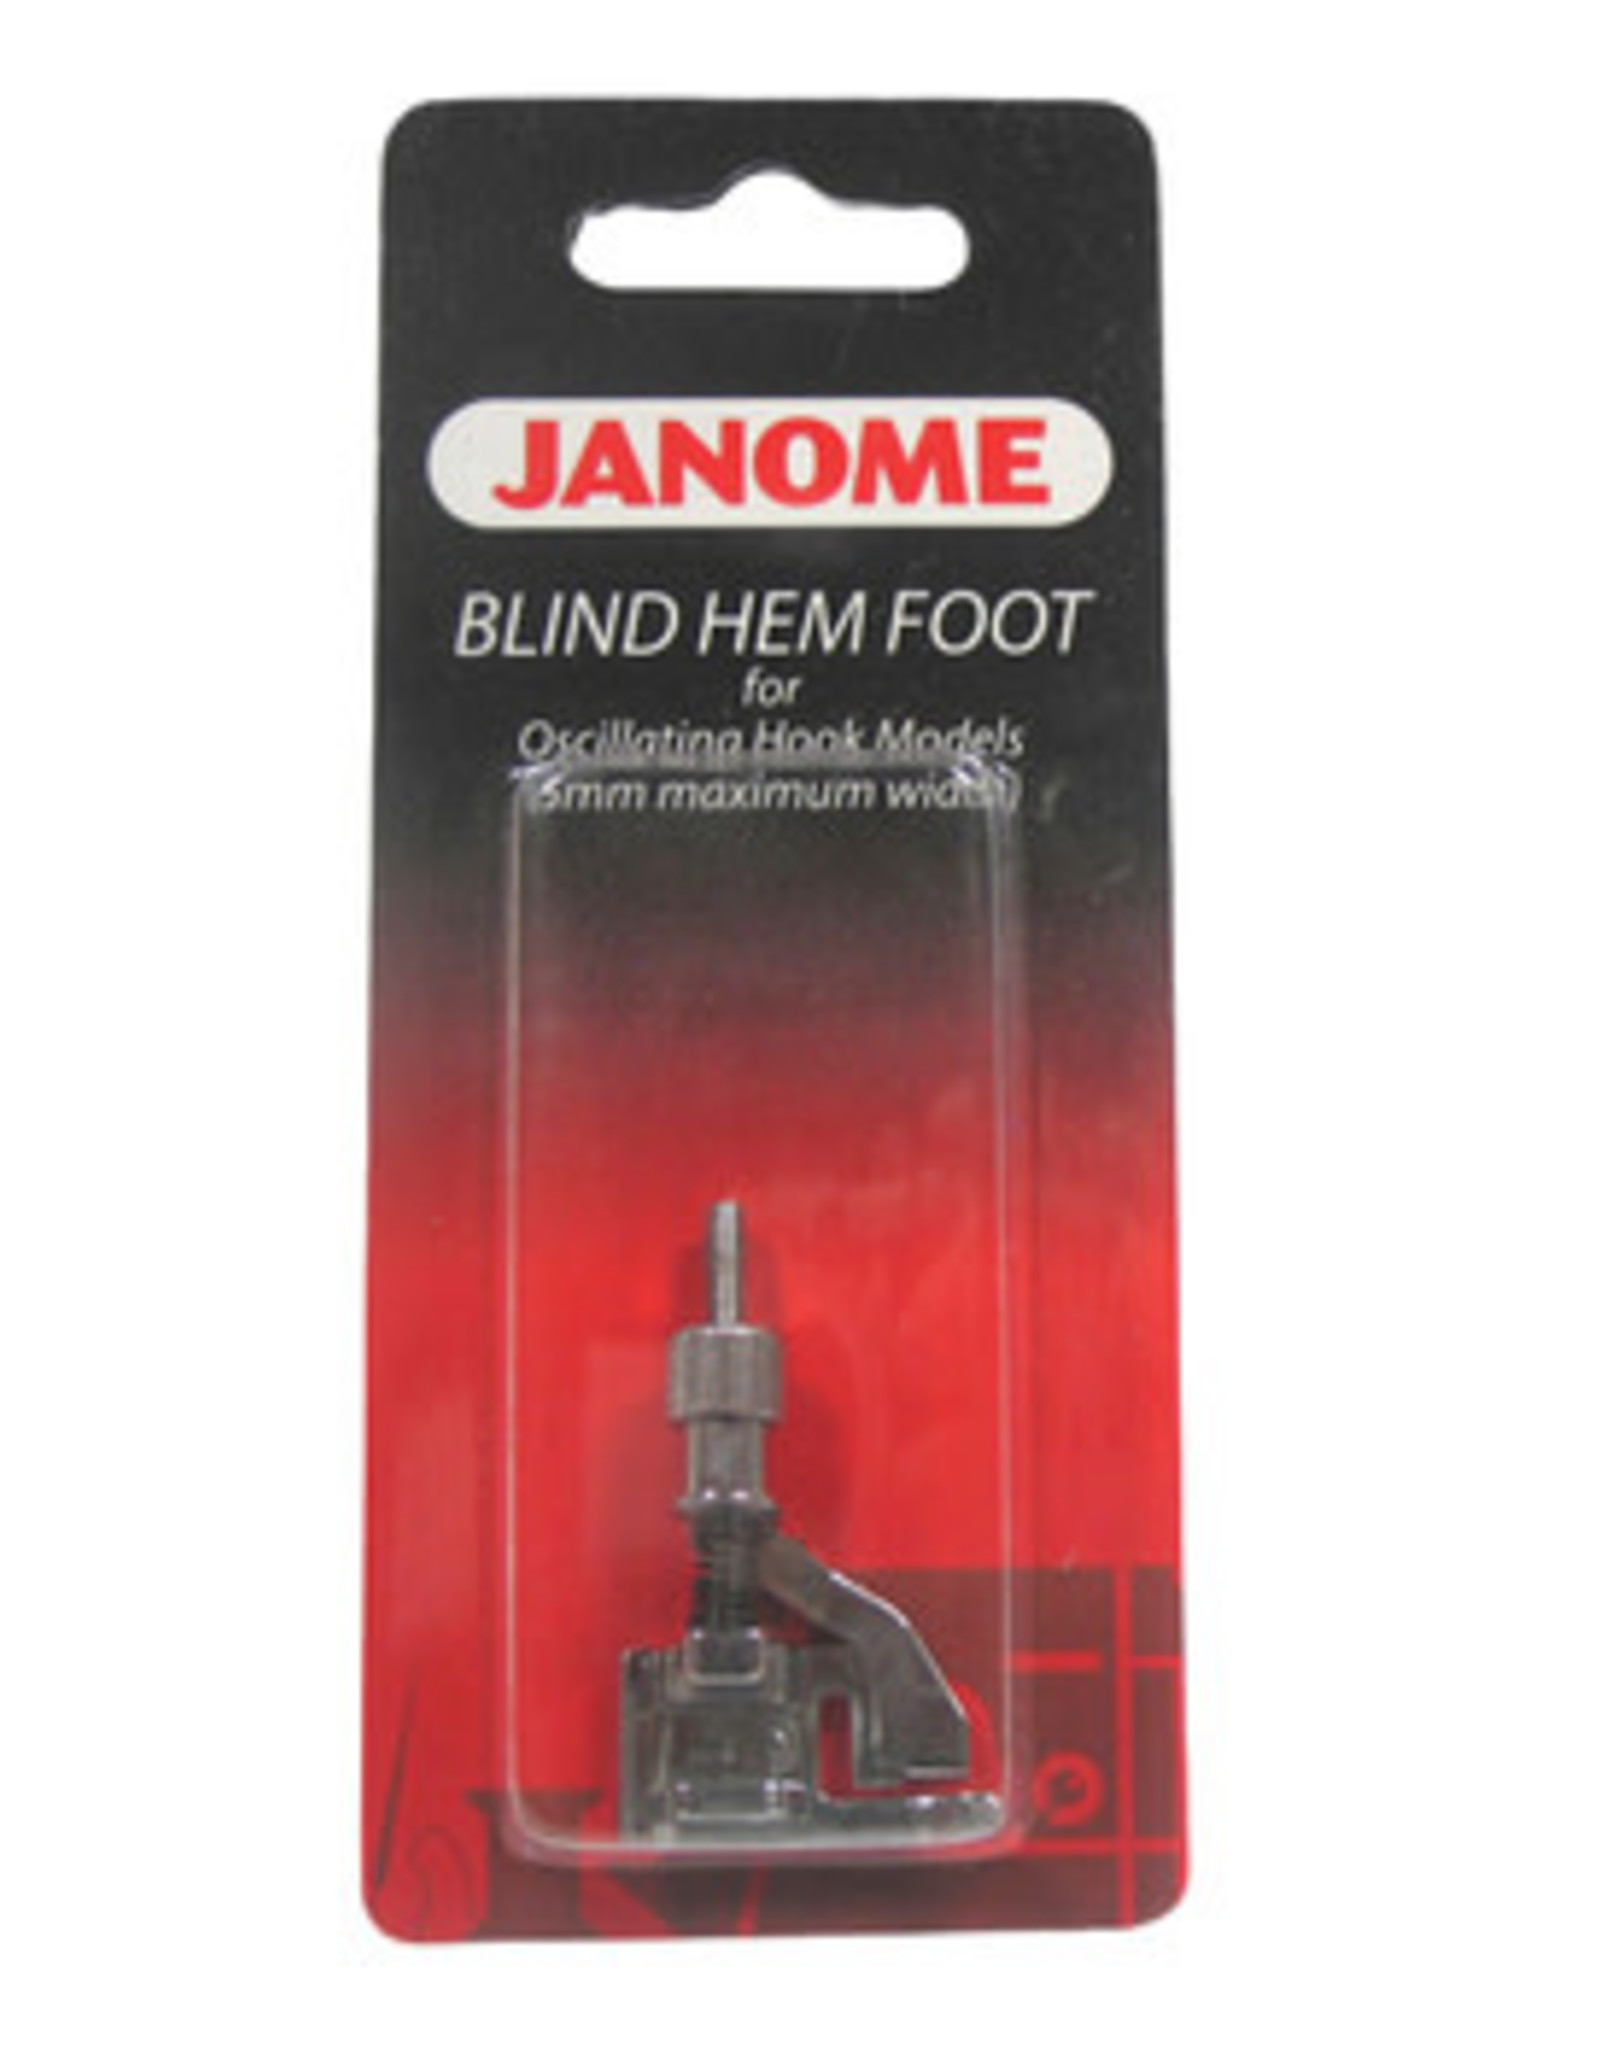 Janome Blind Hem Foot oscillating- 200130006